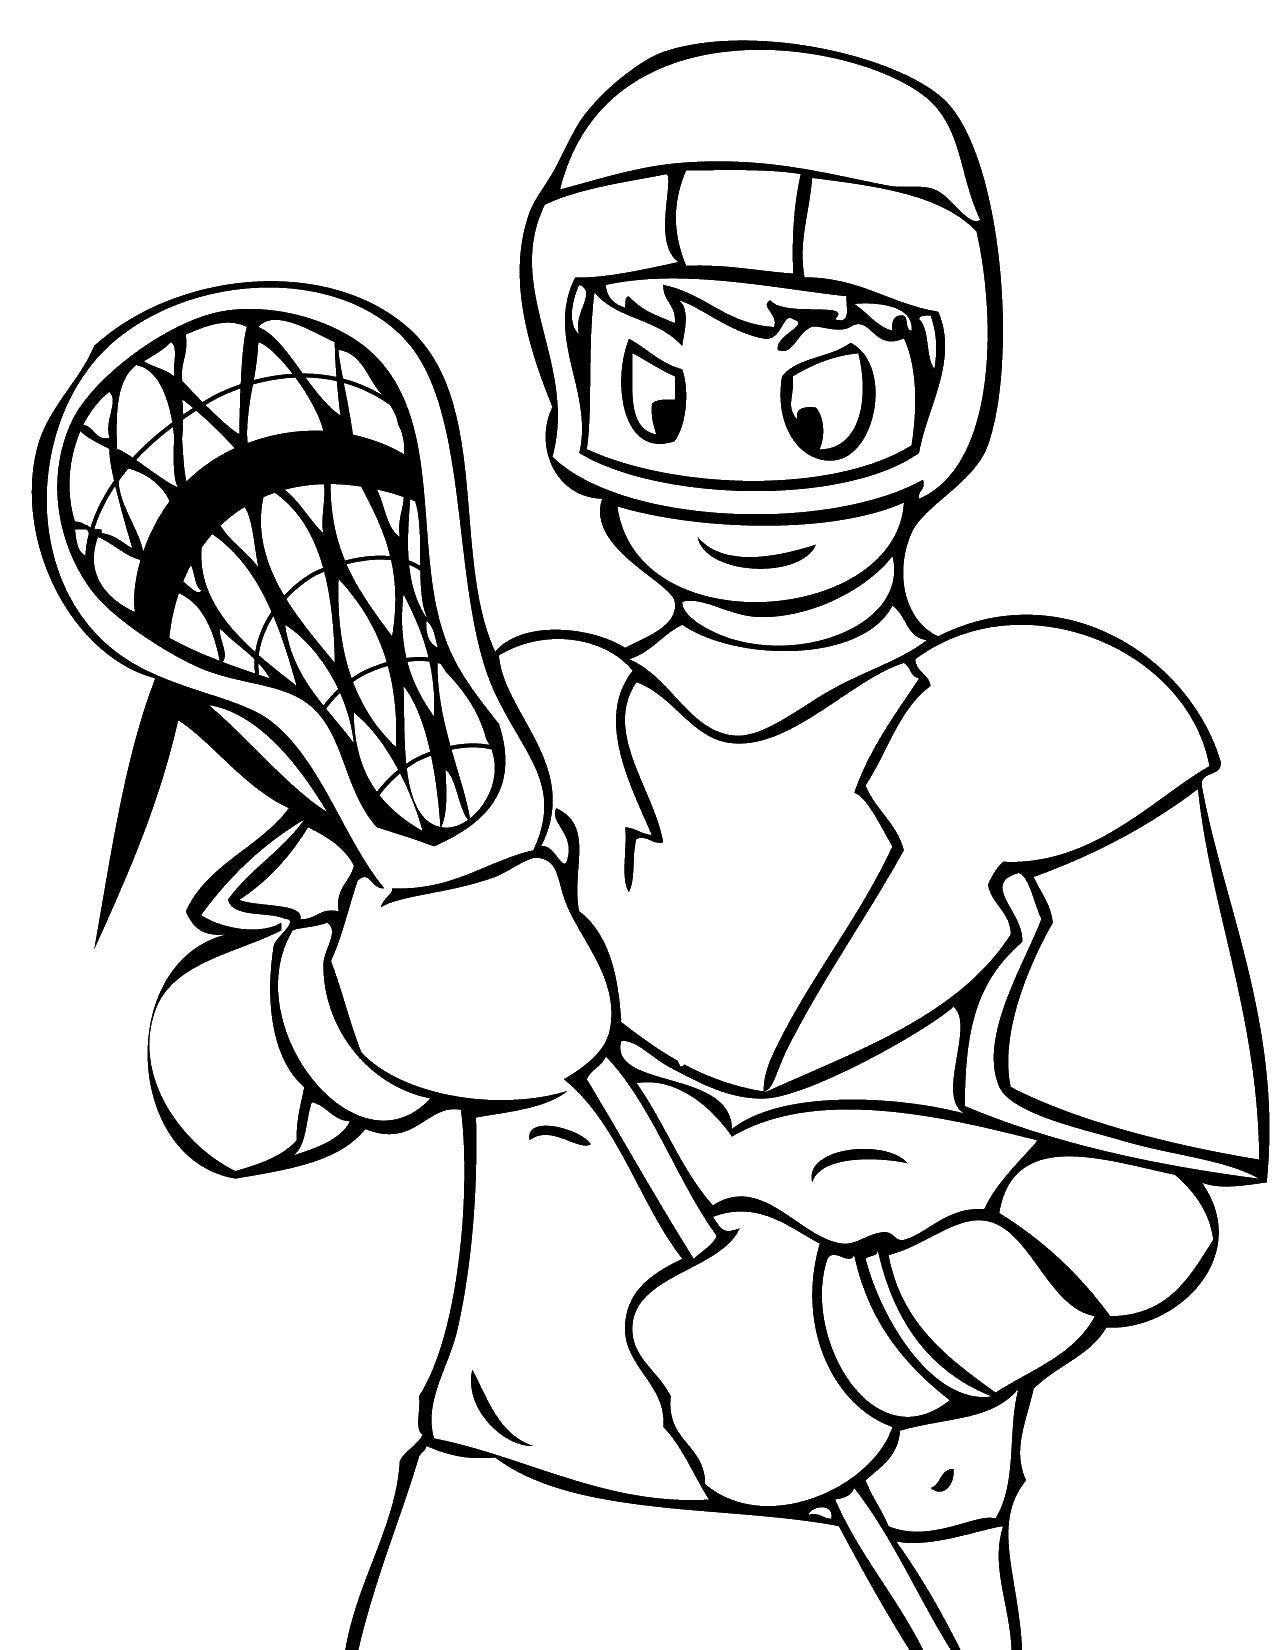 Coloring Bandy. Category Sports. Tags:  sports, hockey, hockey player.